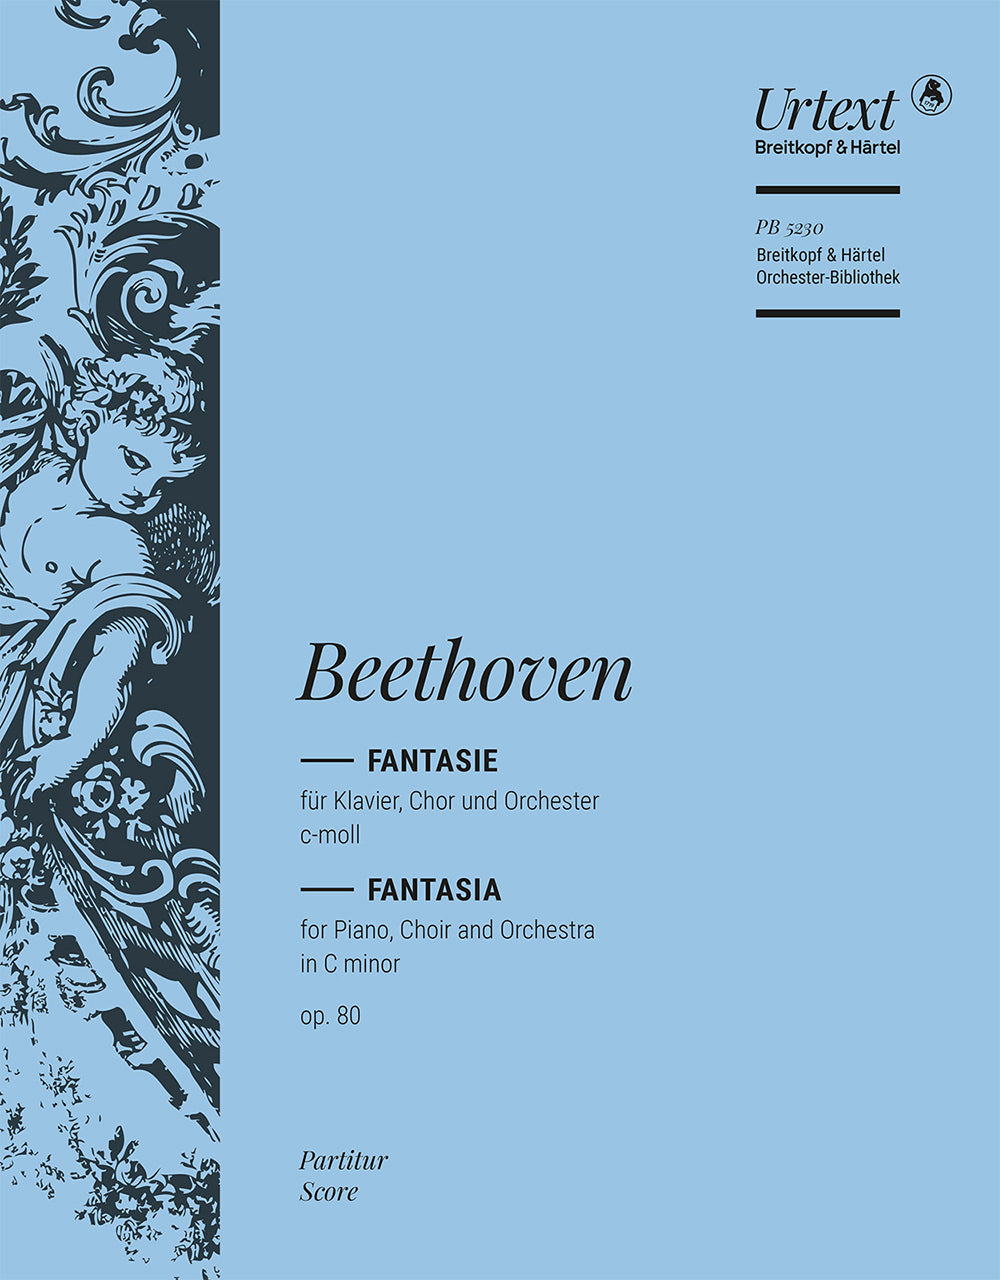 Beethoven Choral Fantasy in c minor Op. 80 - Full Score